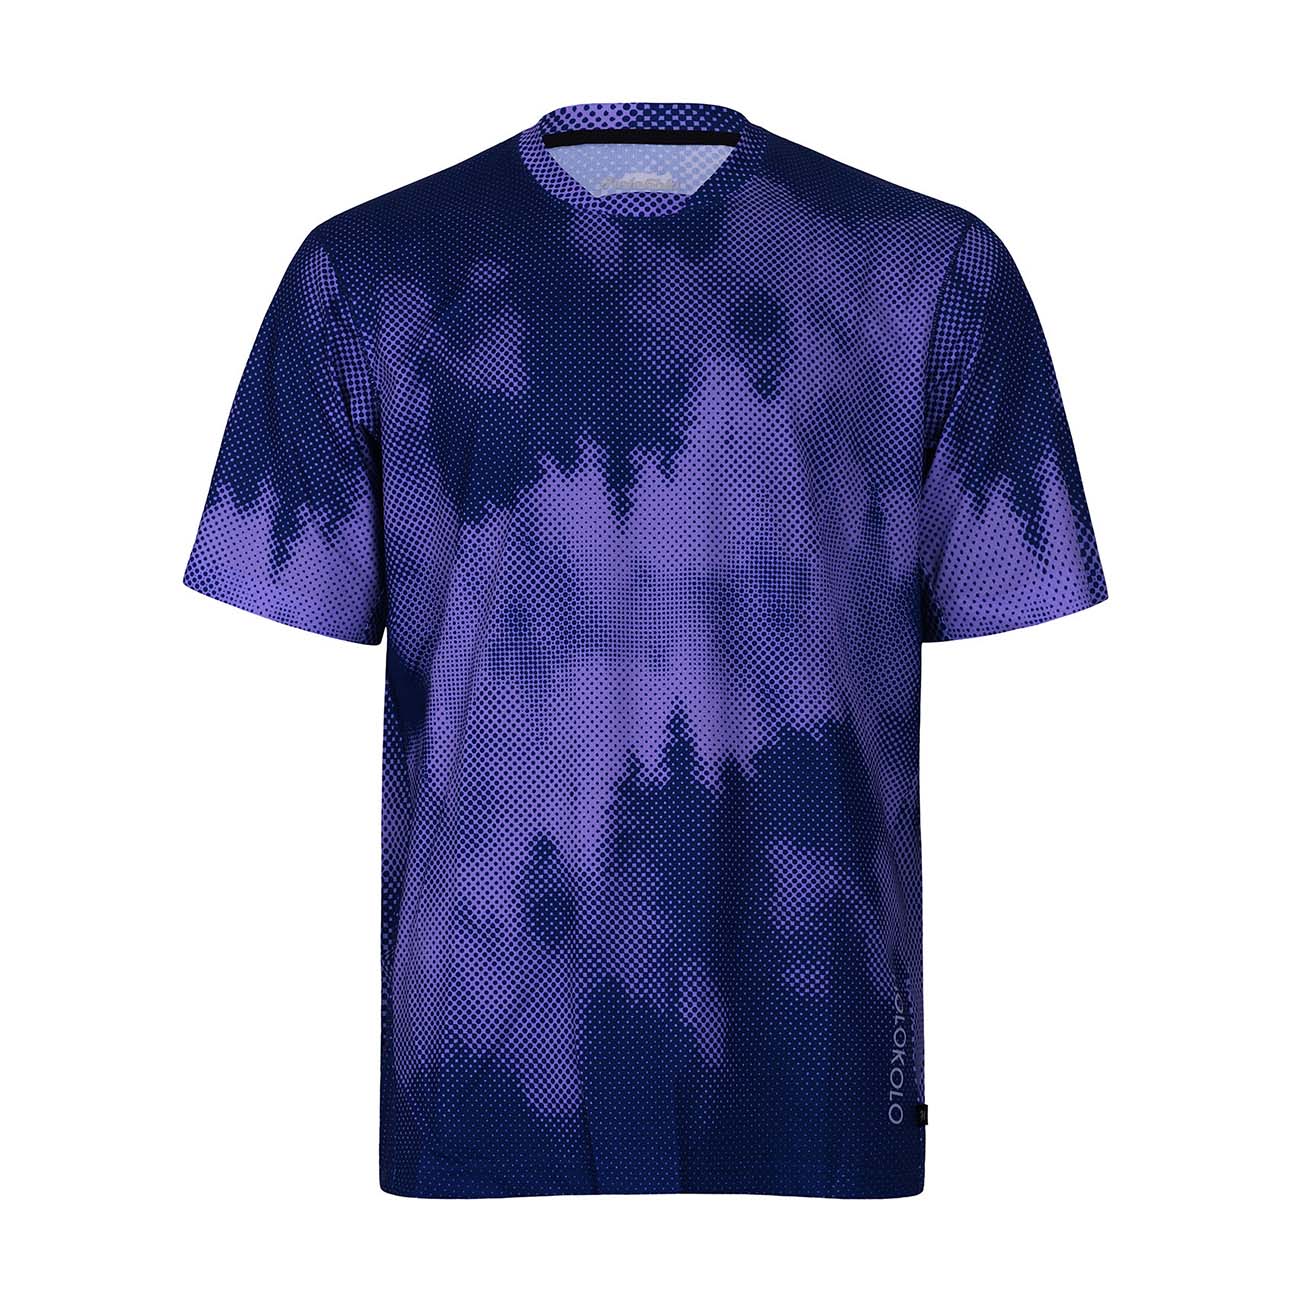 HOLOKOLO Kolarska Koszulka I Spodnie MTB - NIGHTFALL MTB - Czarny/niebieski